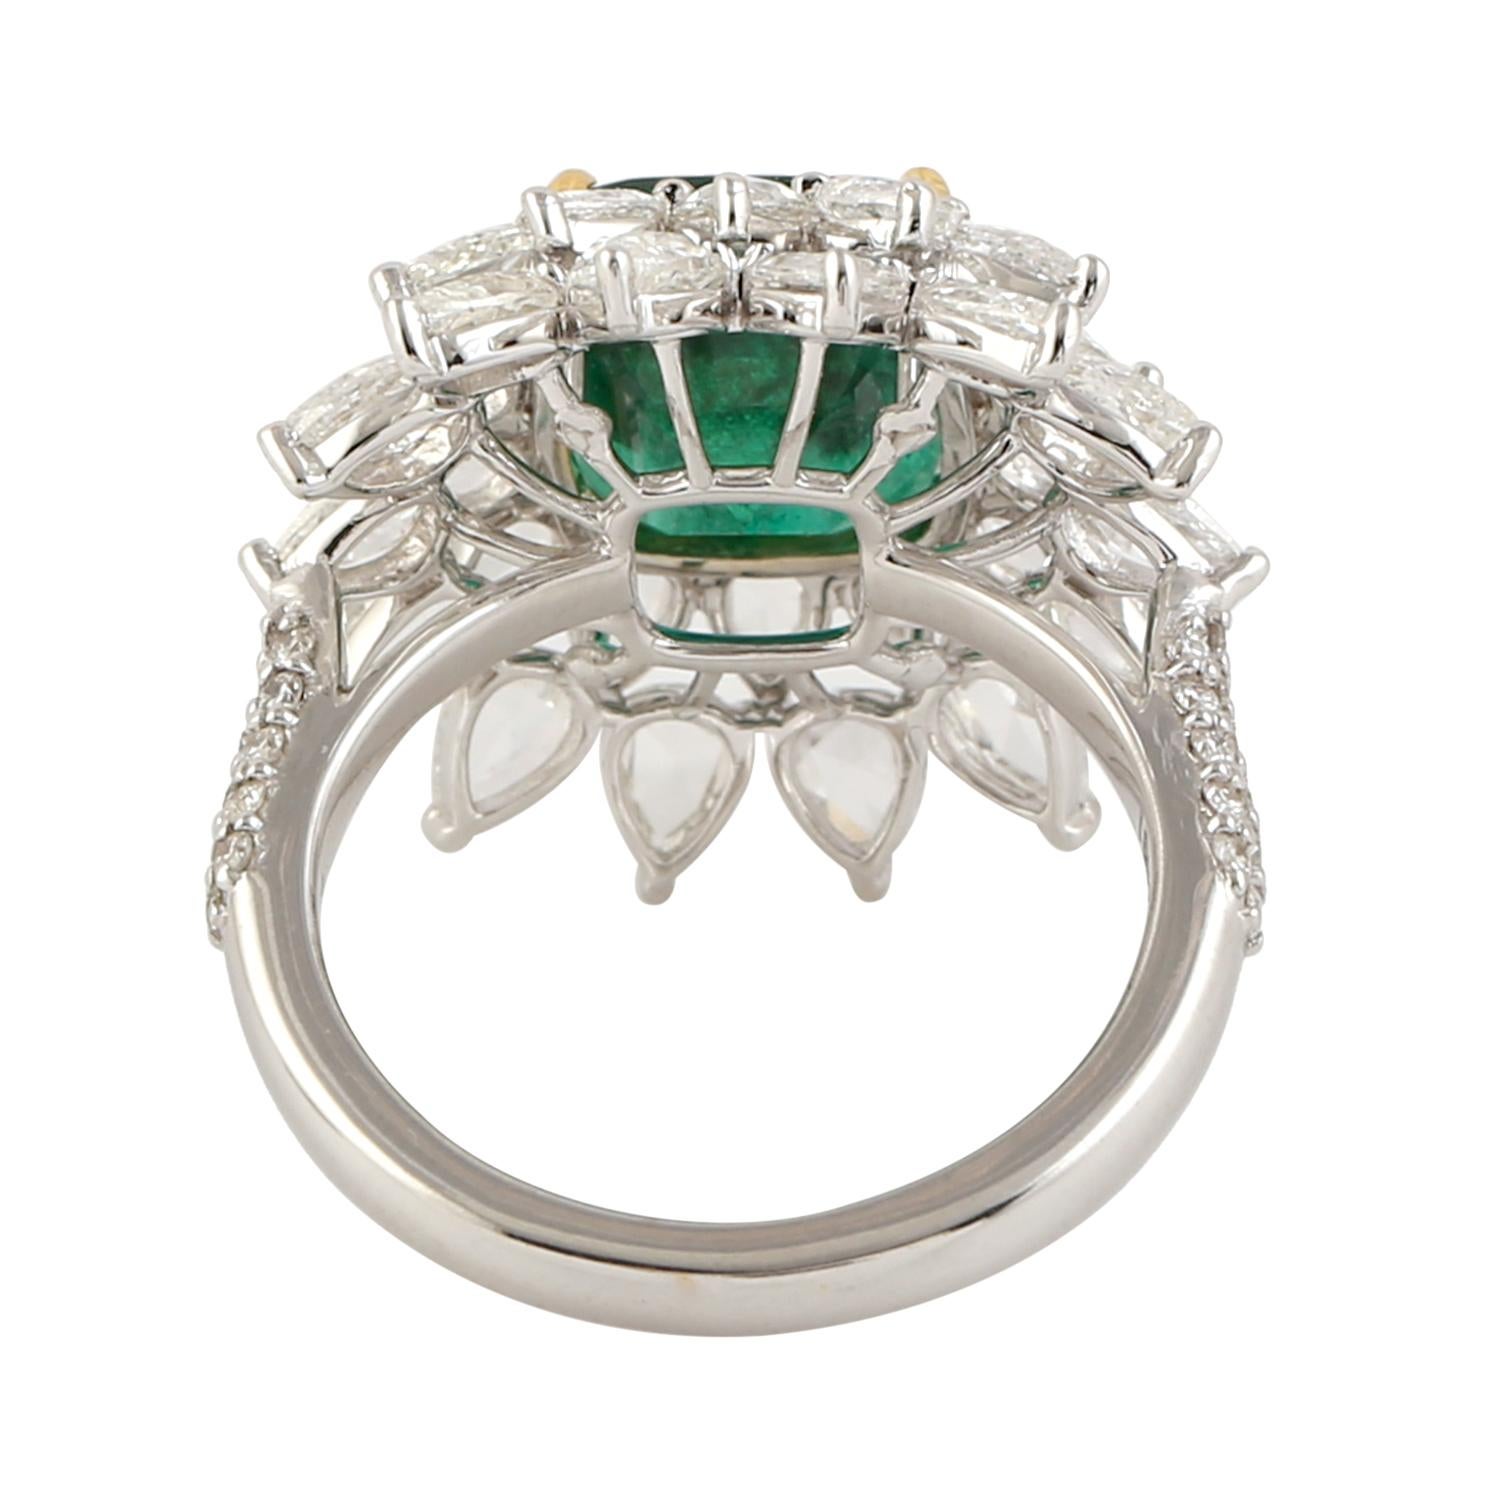 Emerald Cut Designer Emerald and White Diamond Ring in 18K white Gold